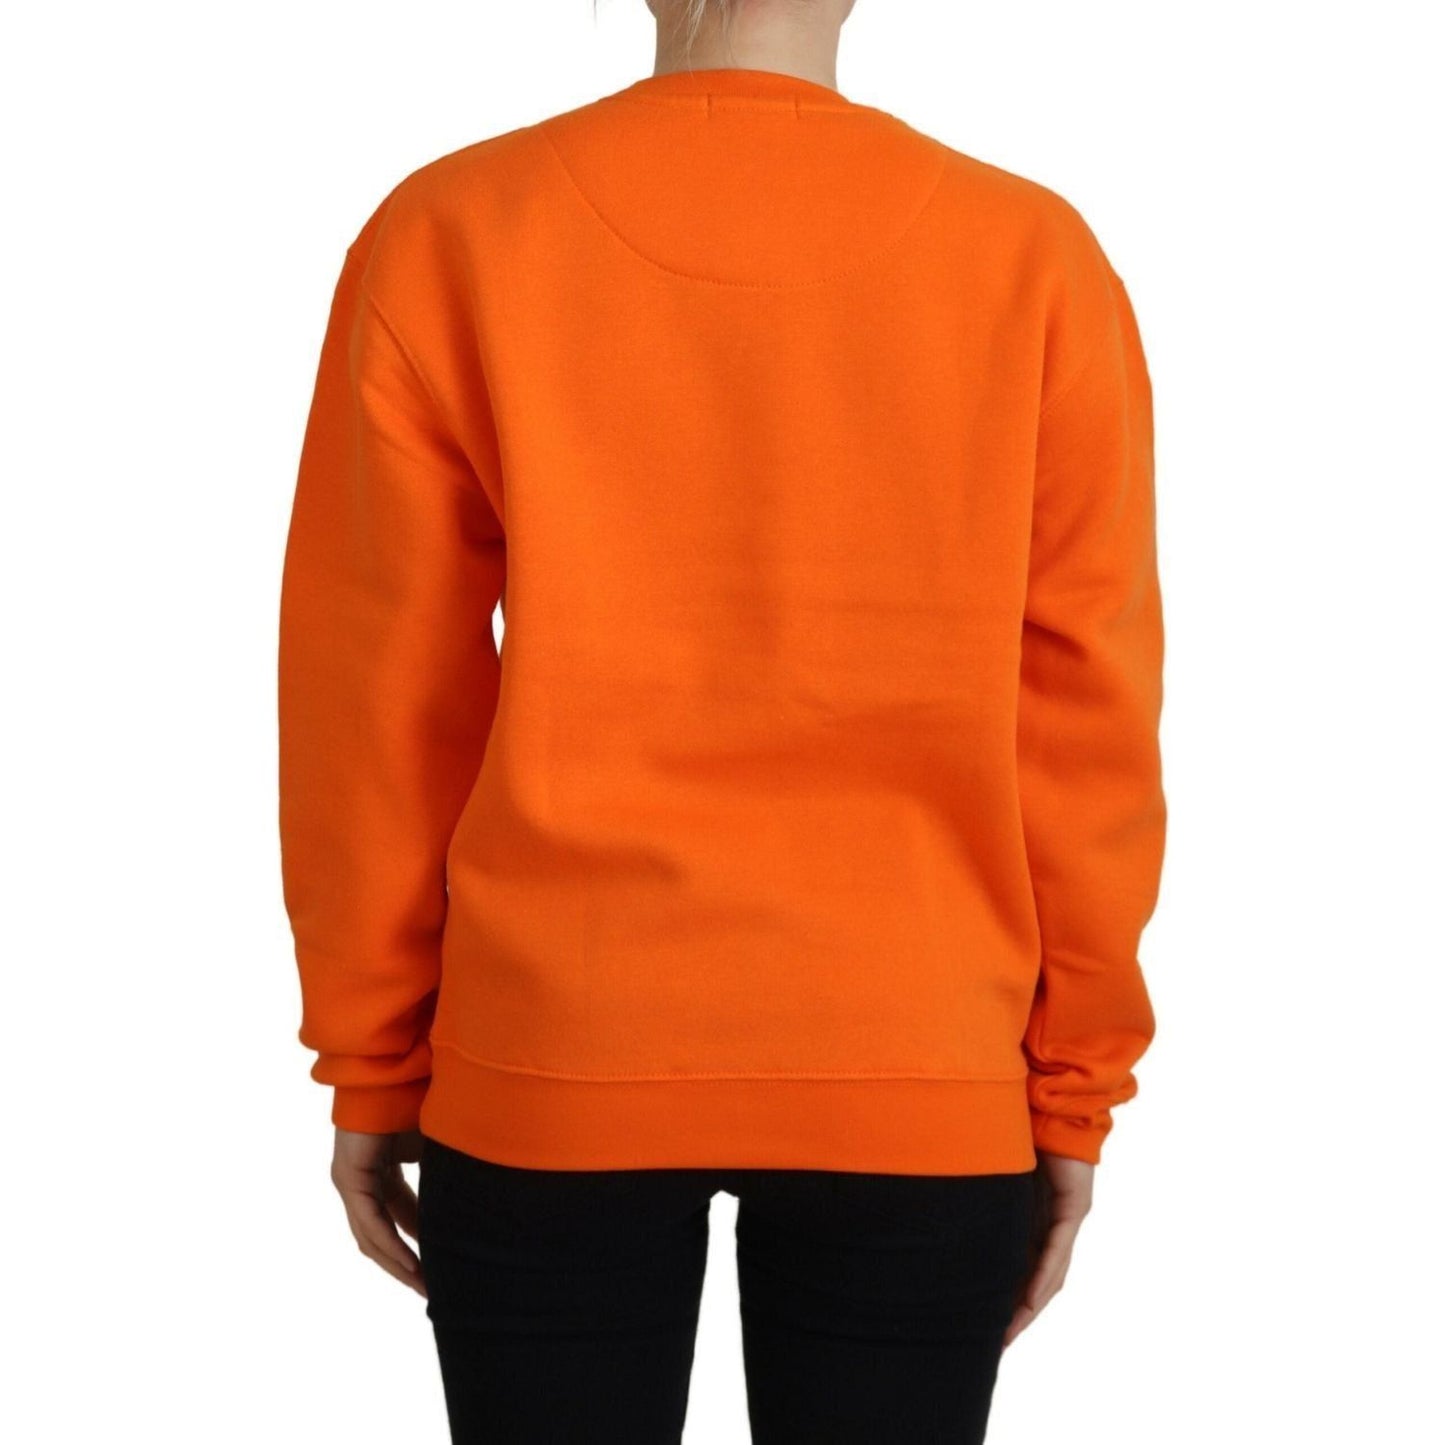 Philippe Model Chic Orange Printed Long Sleeve Pullover Sweater orange-printed-long-sleeves-pullover-sweater IMG_9321-scaled-04fcbc32-20b.jpg